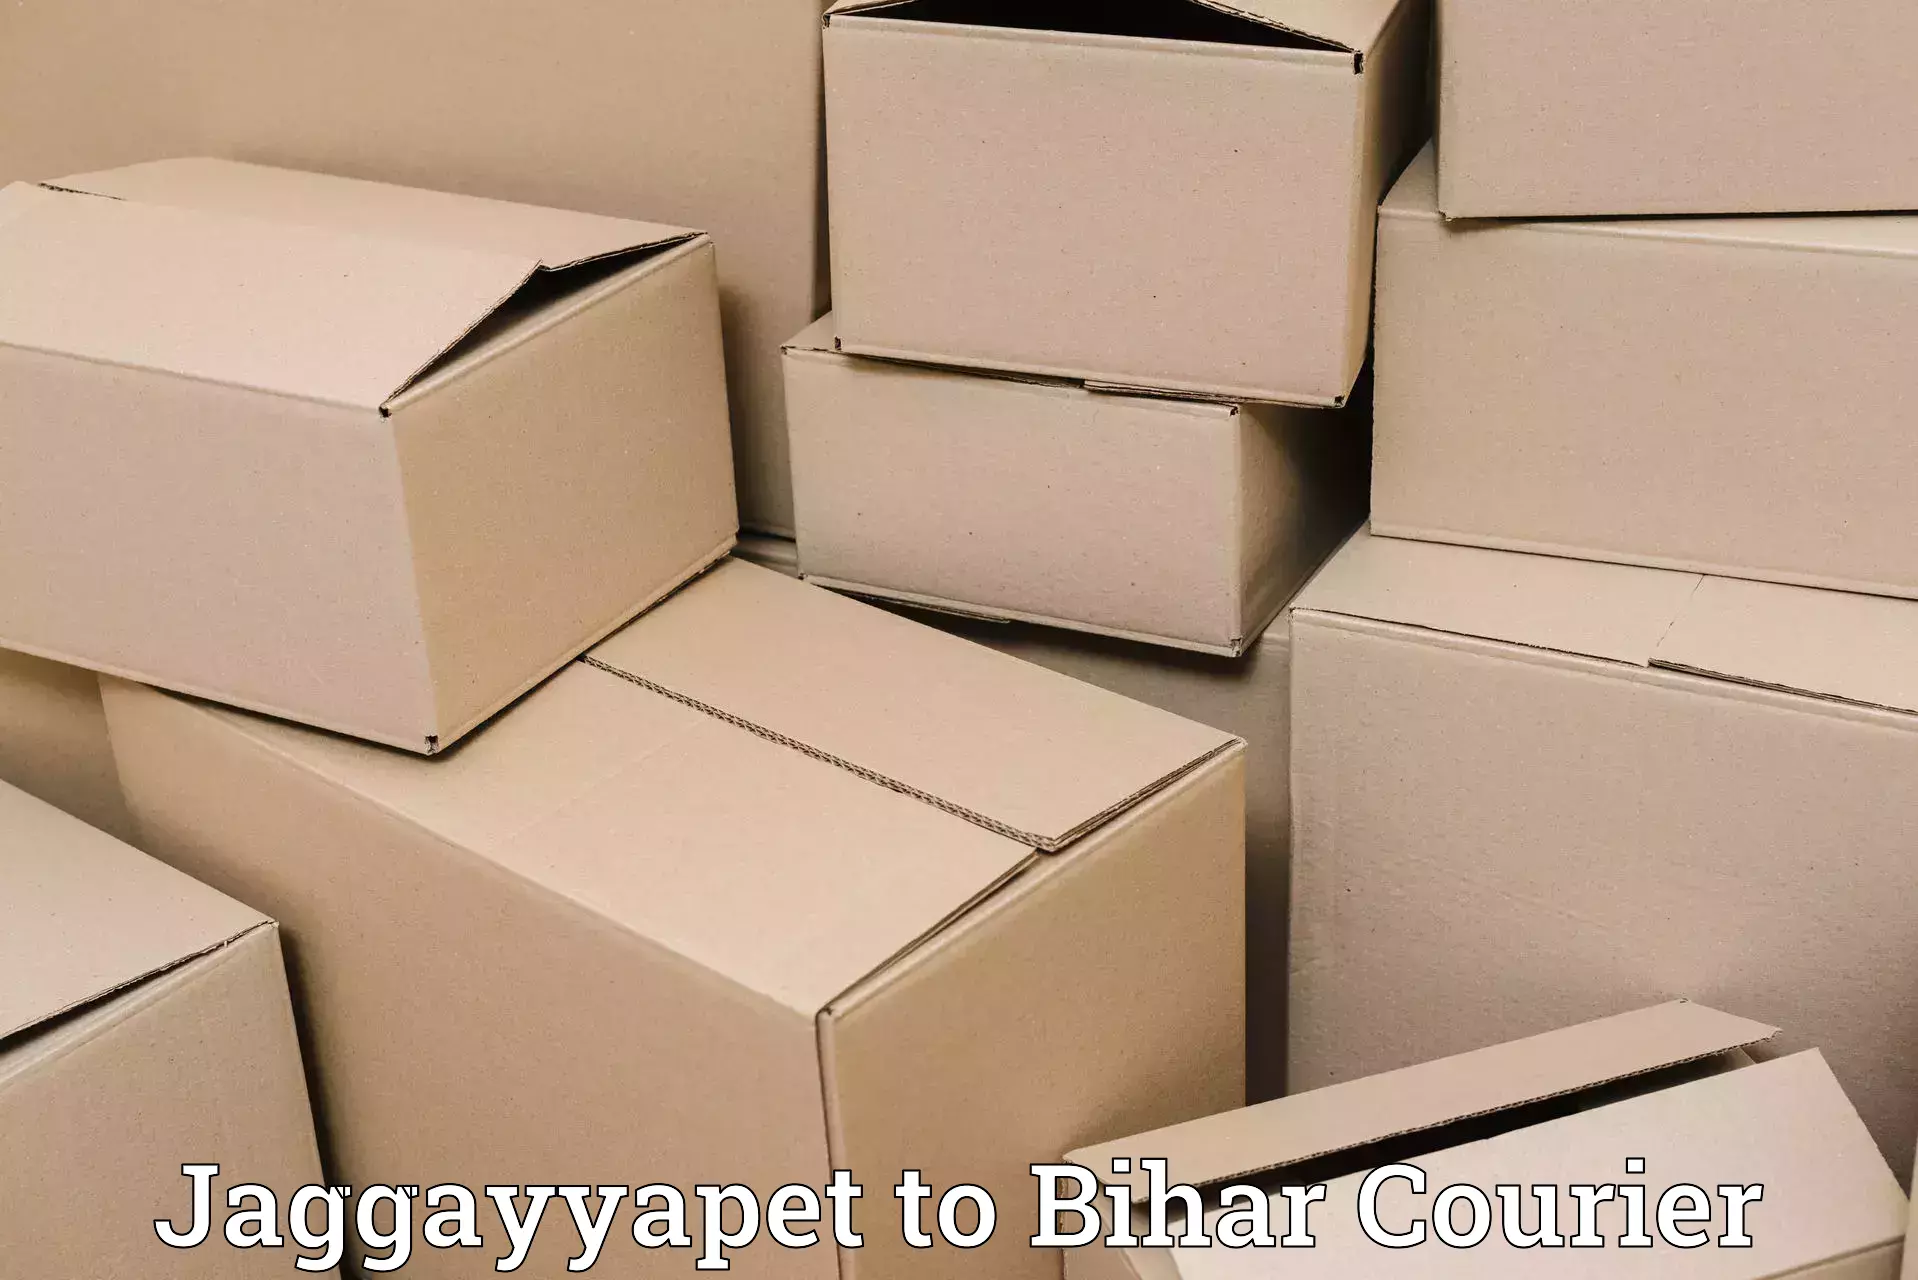 State-of-the-art courier technology Jaggayyapet to Vaishali